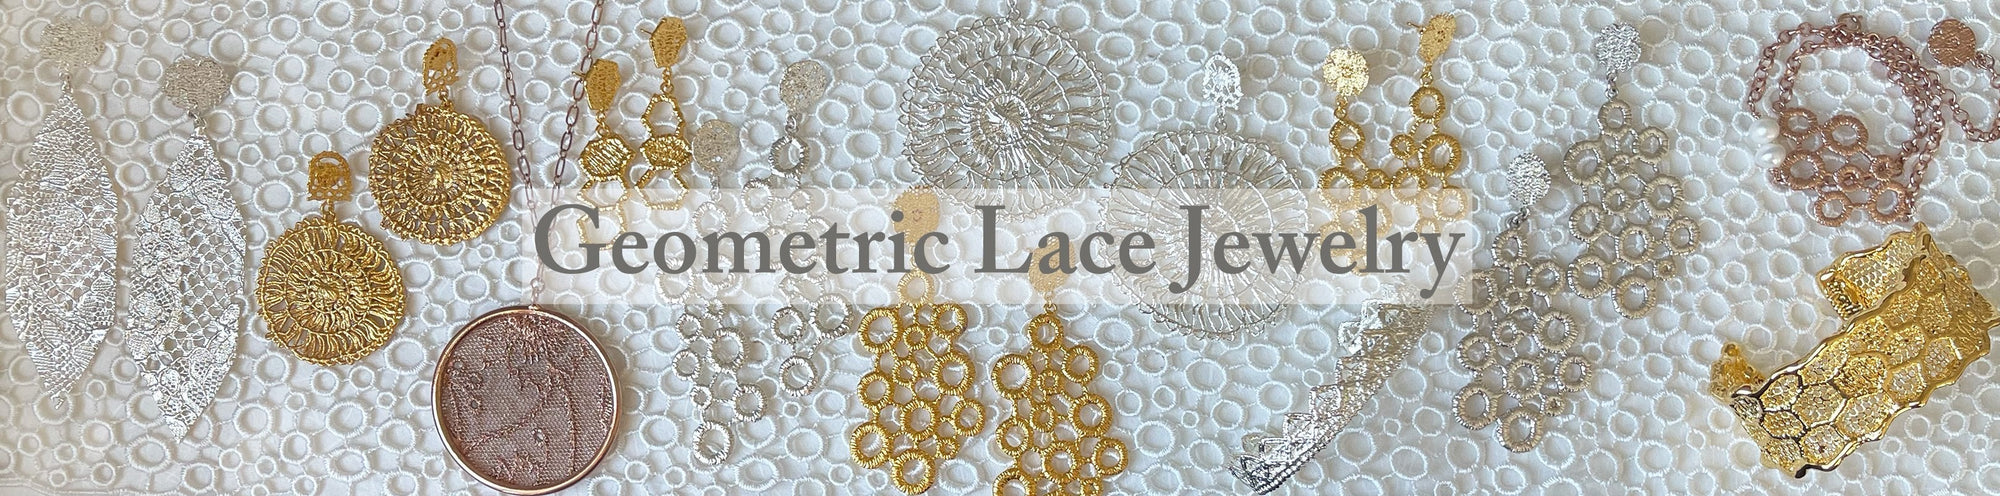 Geometric Lace Jewelry